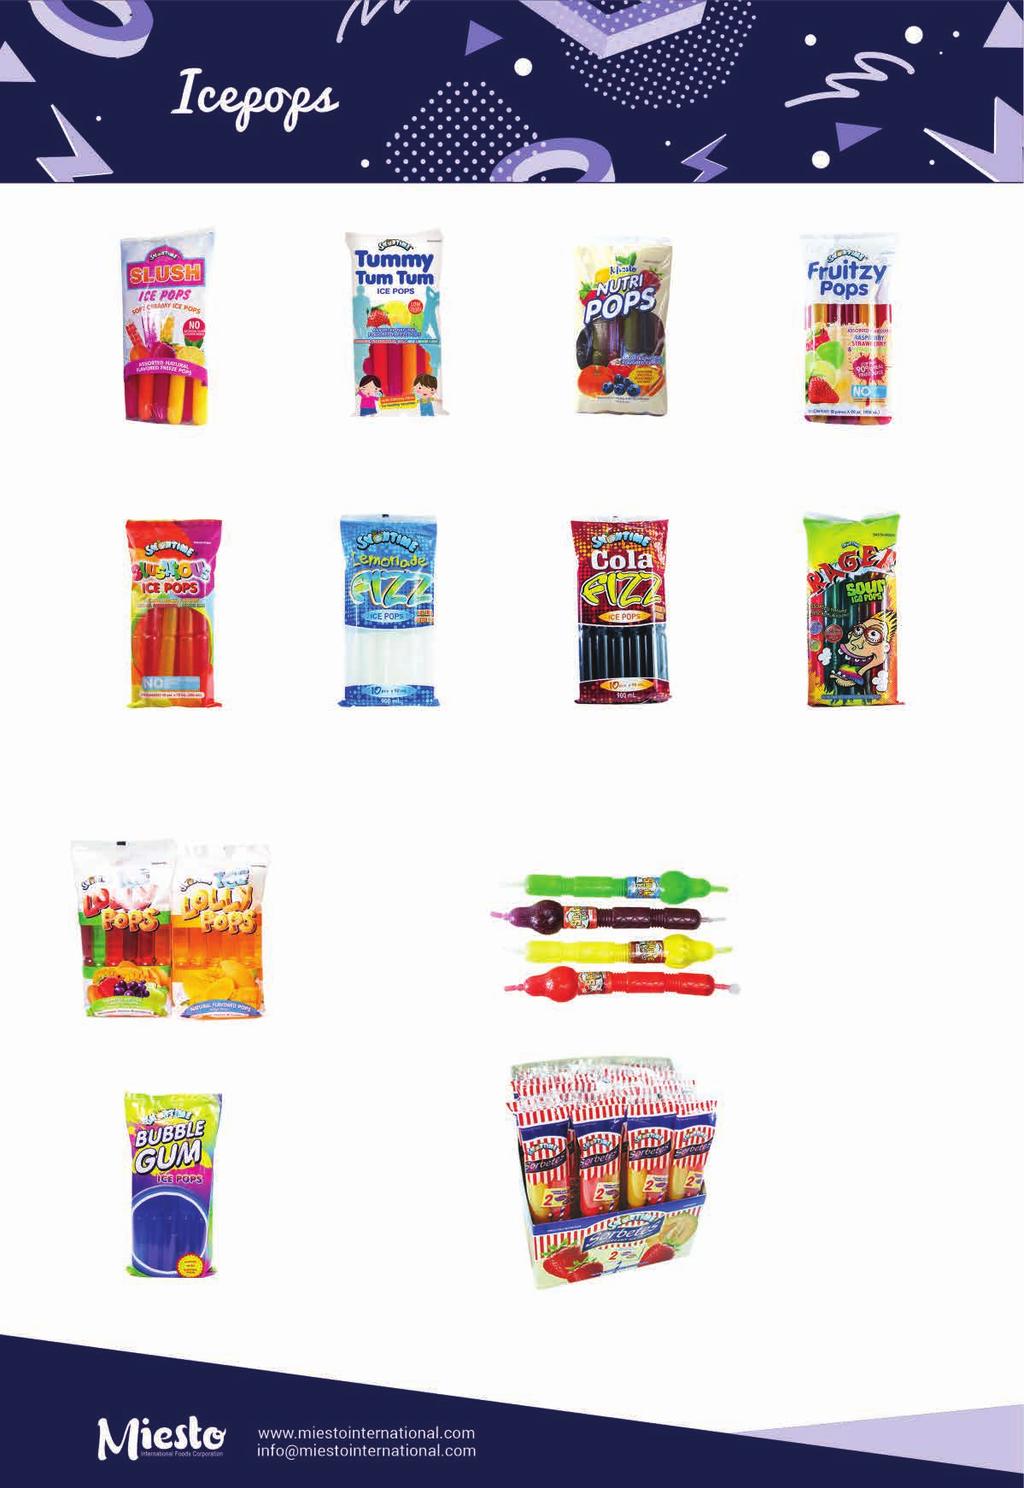 Icepops Berry Slush Pops Tummy Tum Tum Nutri Pops Fruitzy Pops Packing: 12 packs x 10 pcs. x 90 ml. Packing: 16 packs x 8 pcs. x 70 ml. Loadability: 1,638 cases/20 footer Packing: 16 packs x 10 pcs.